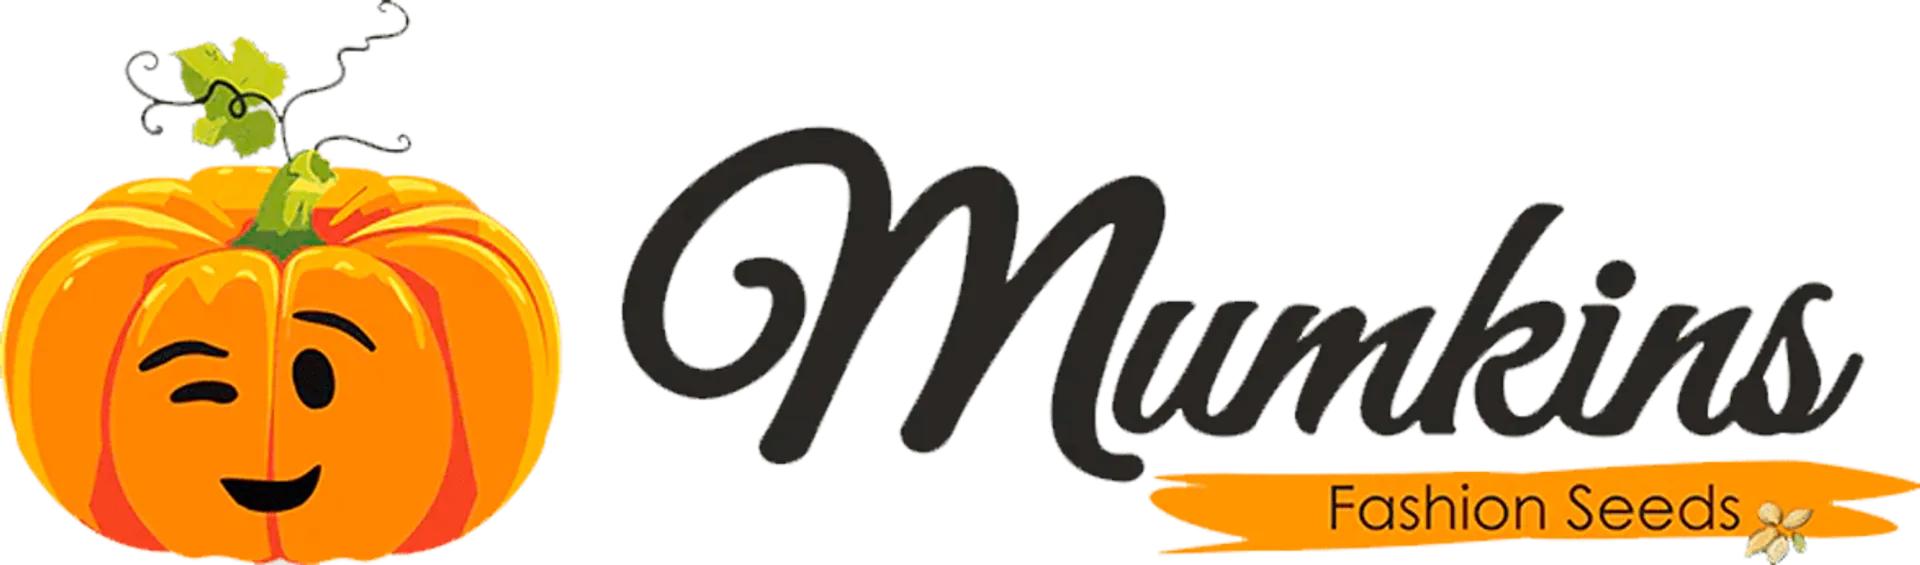 MUMKINS logo. Current catalogue